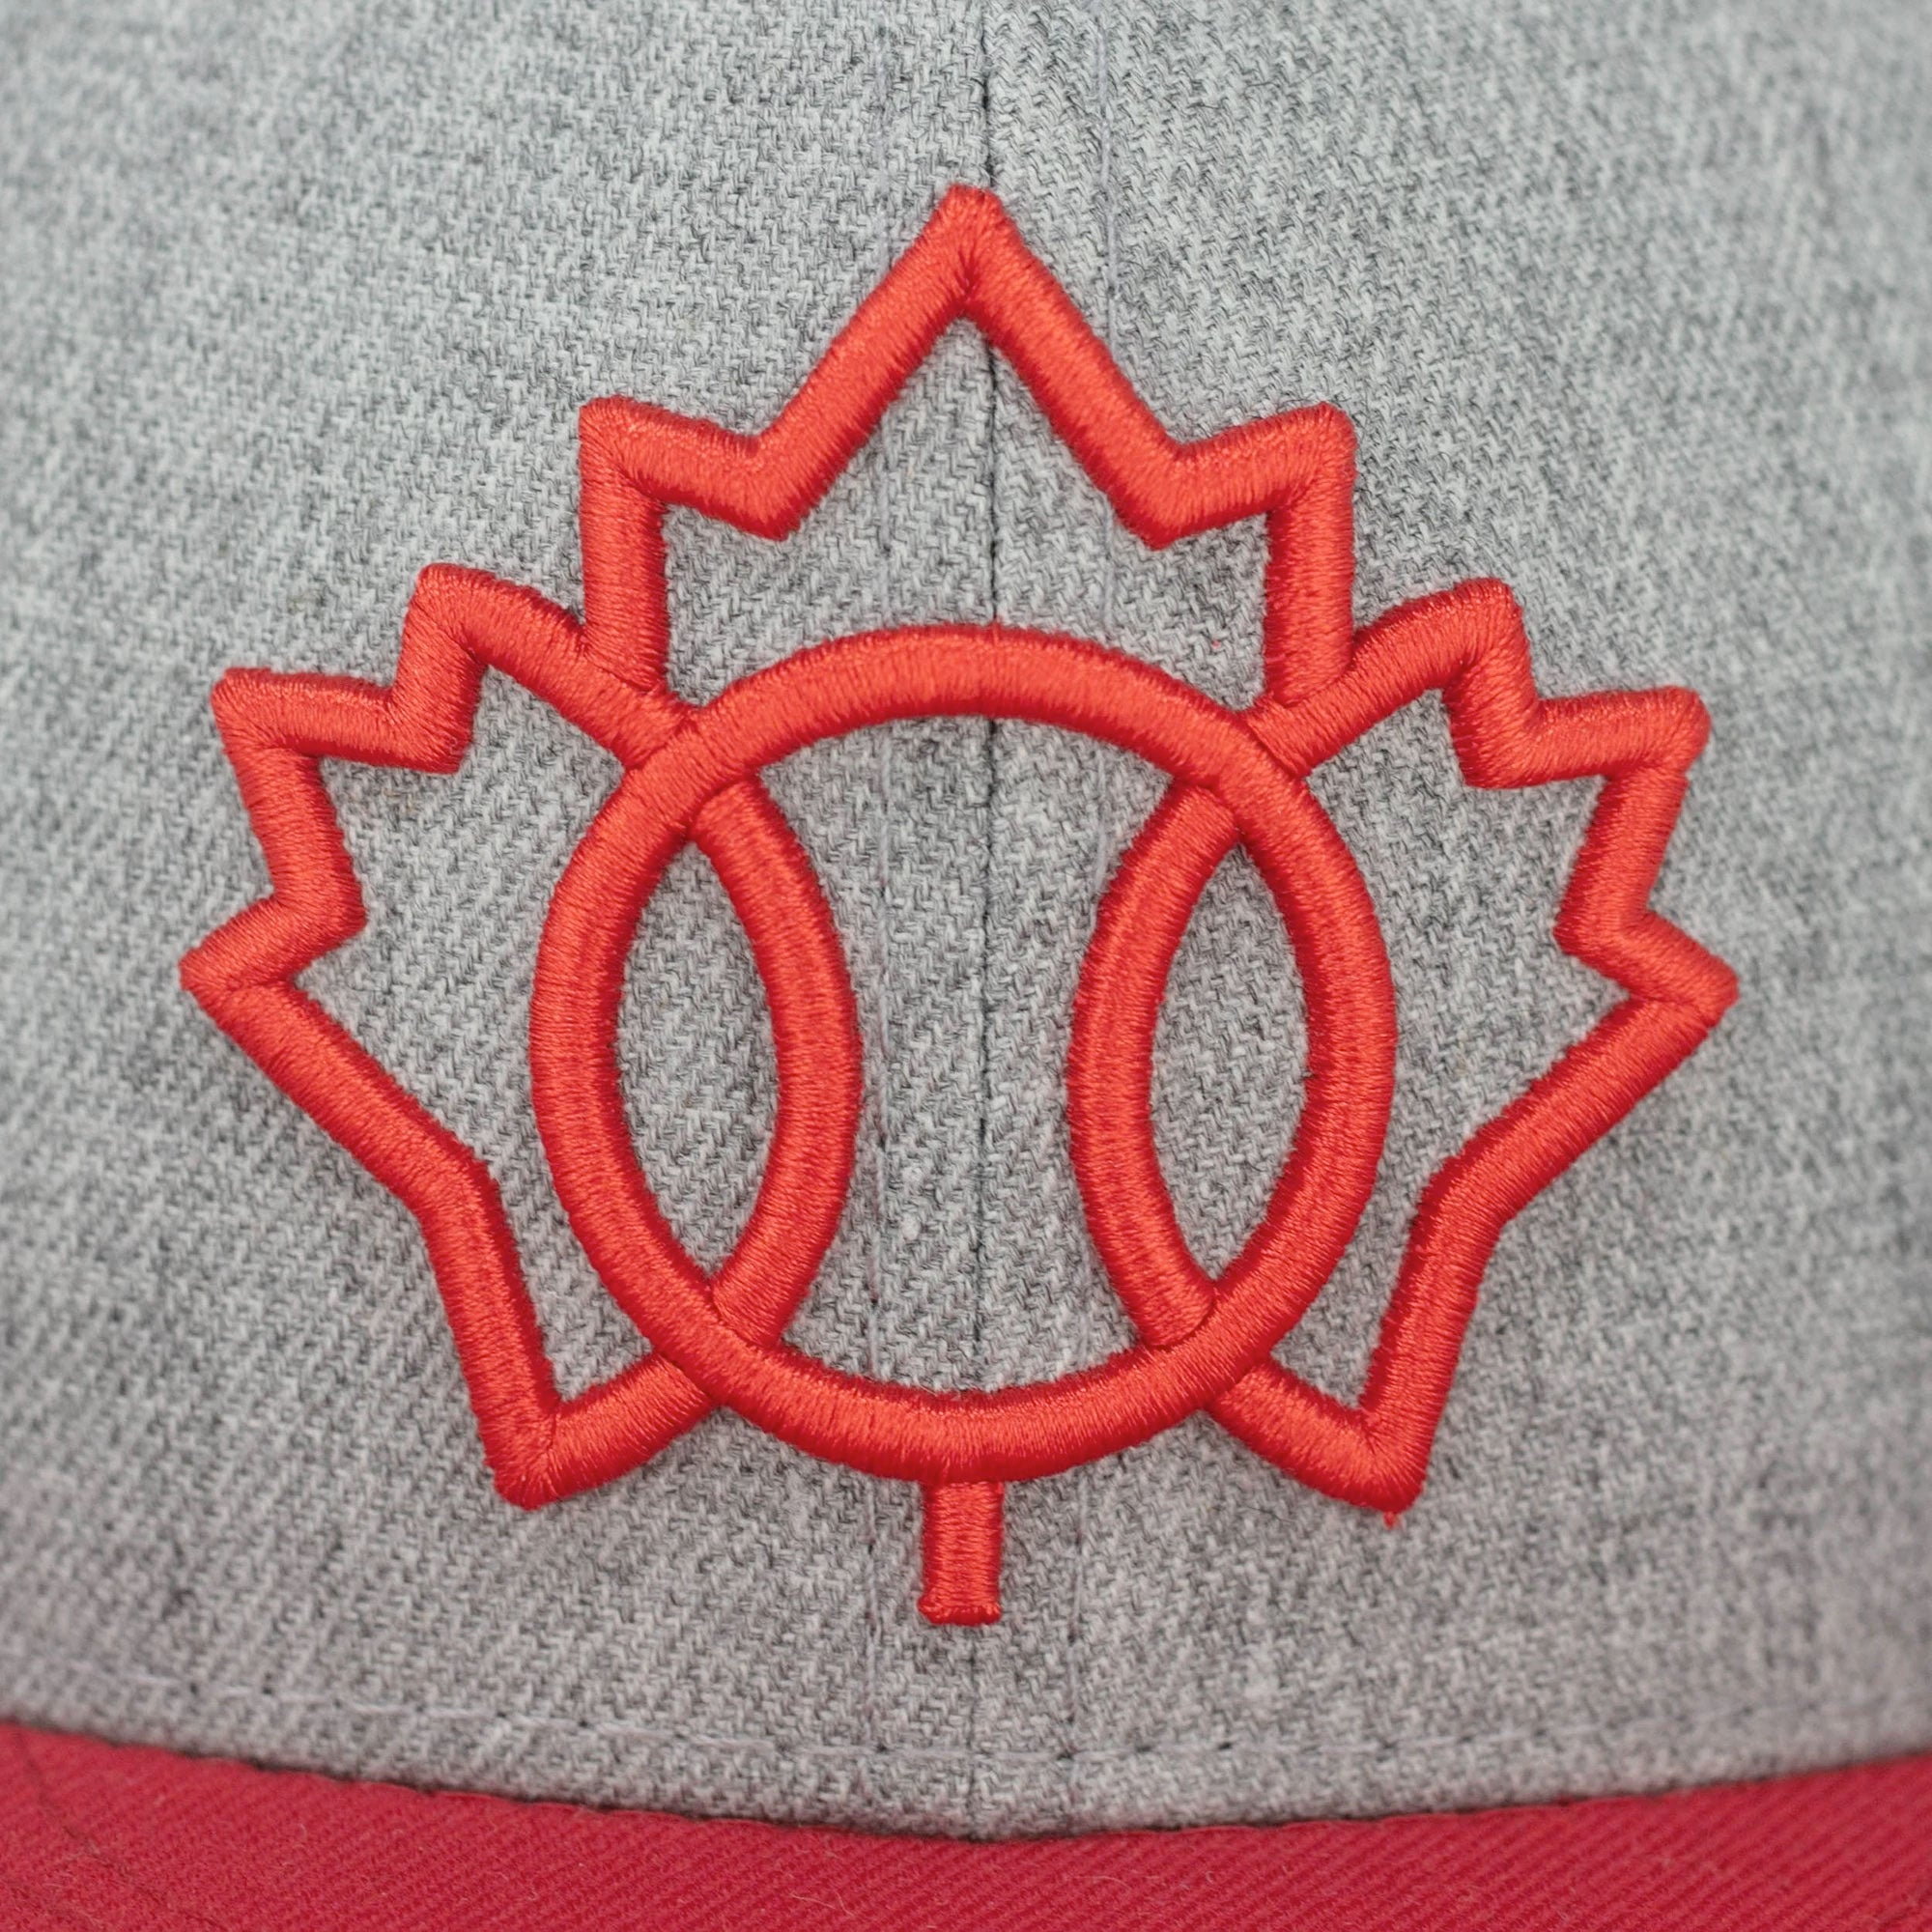 Baseballism Canada Snapback Hat